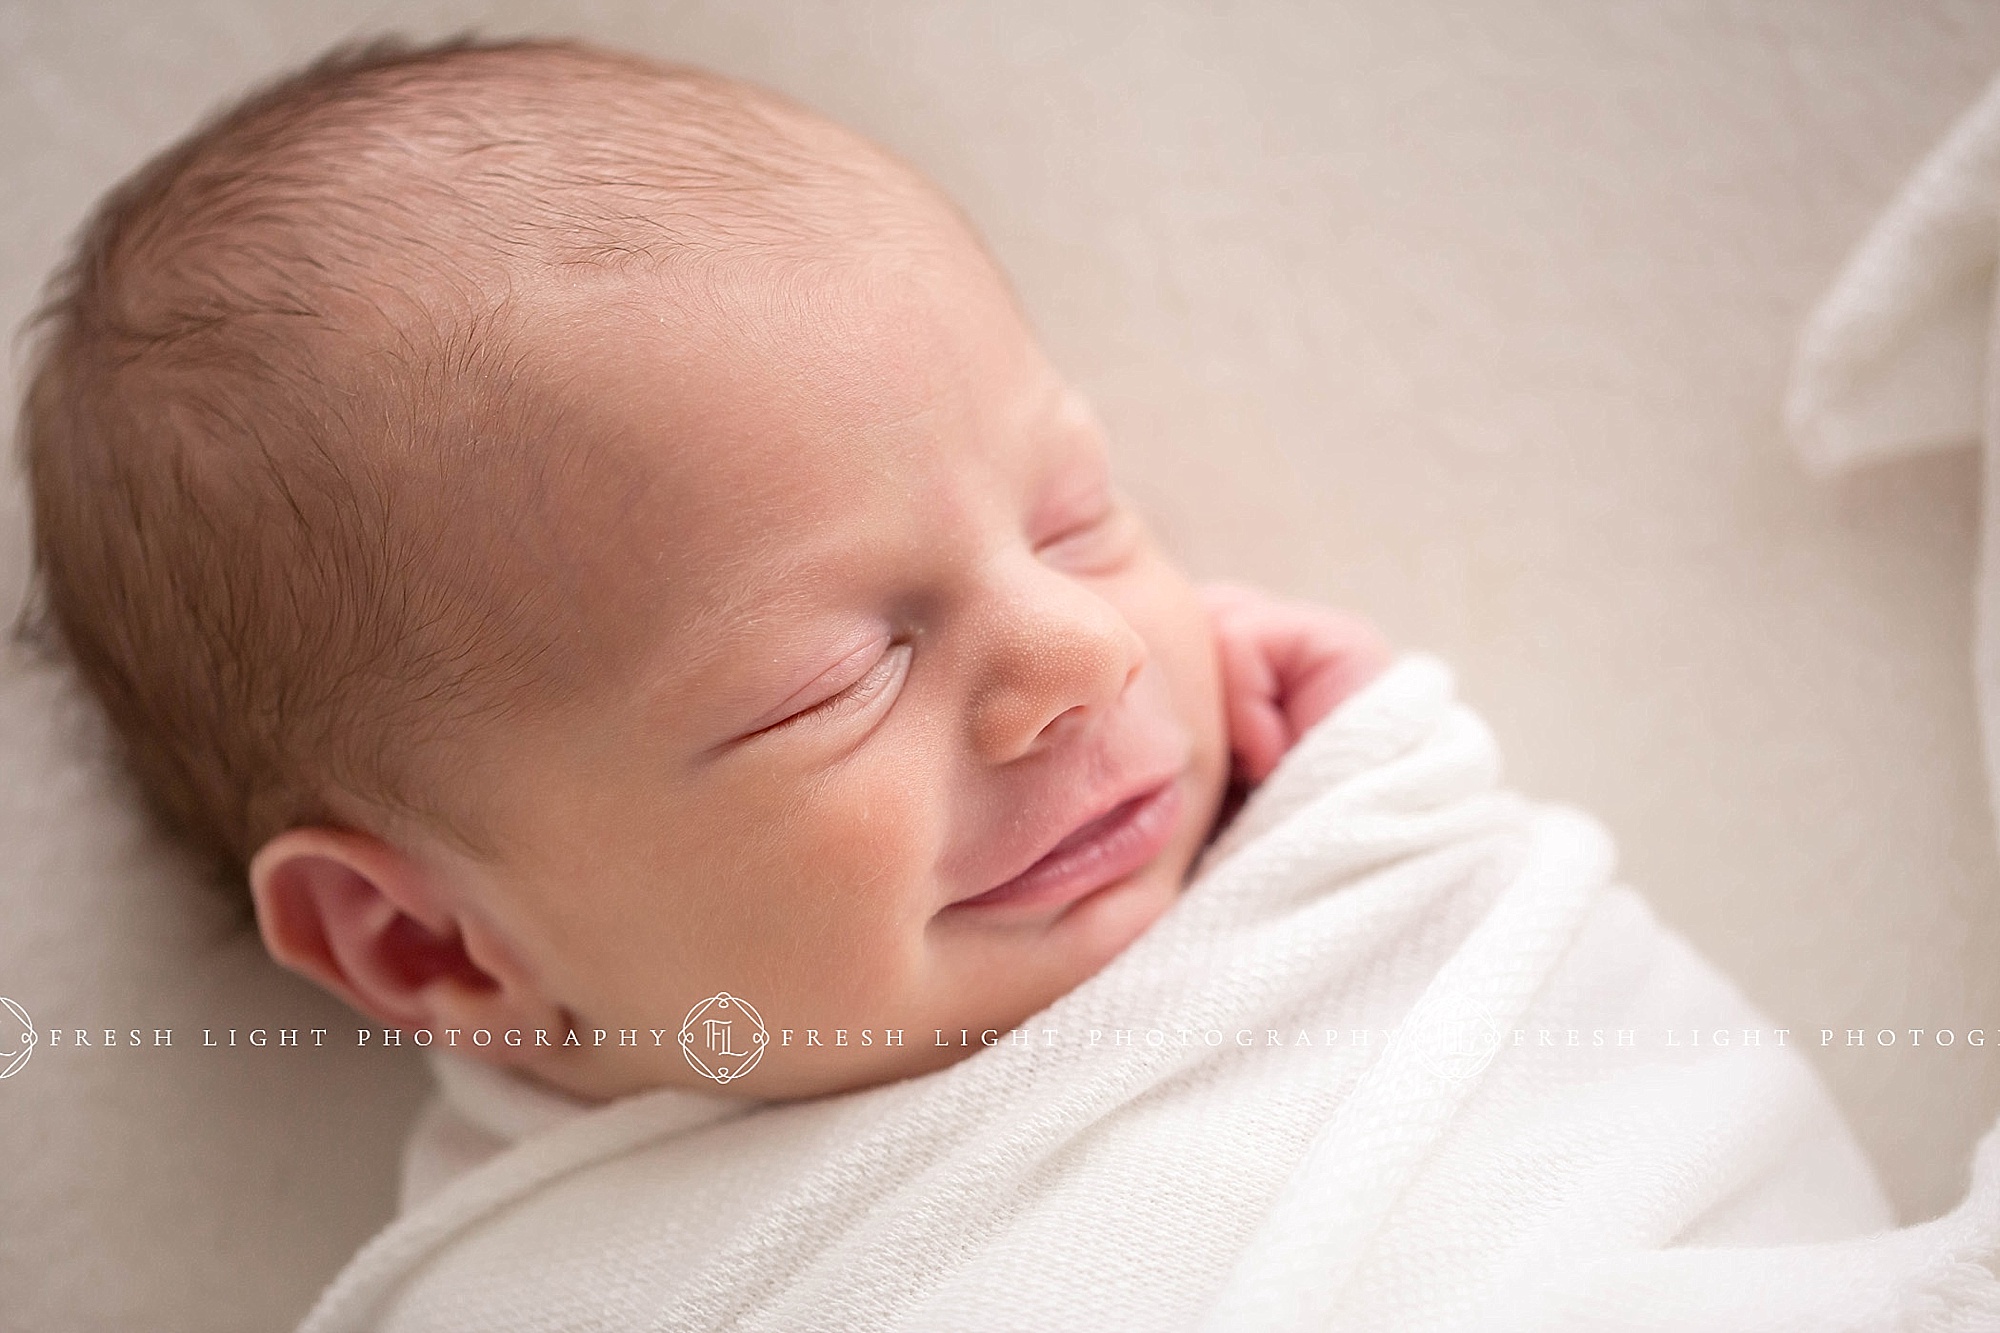 newborn boy smiling for fresh light photography in houston